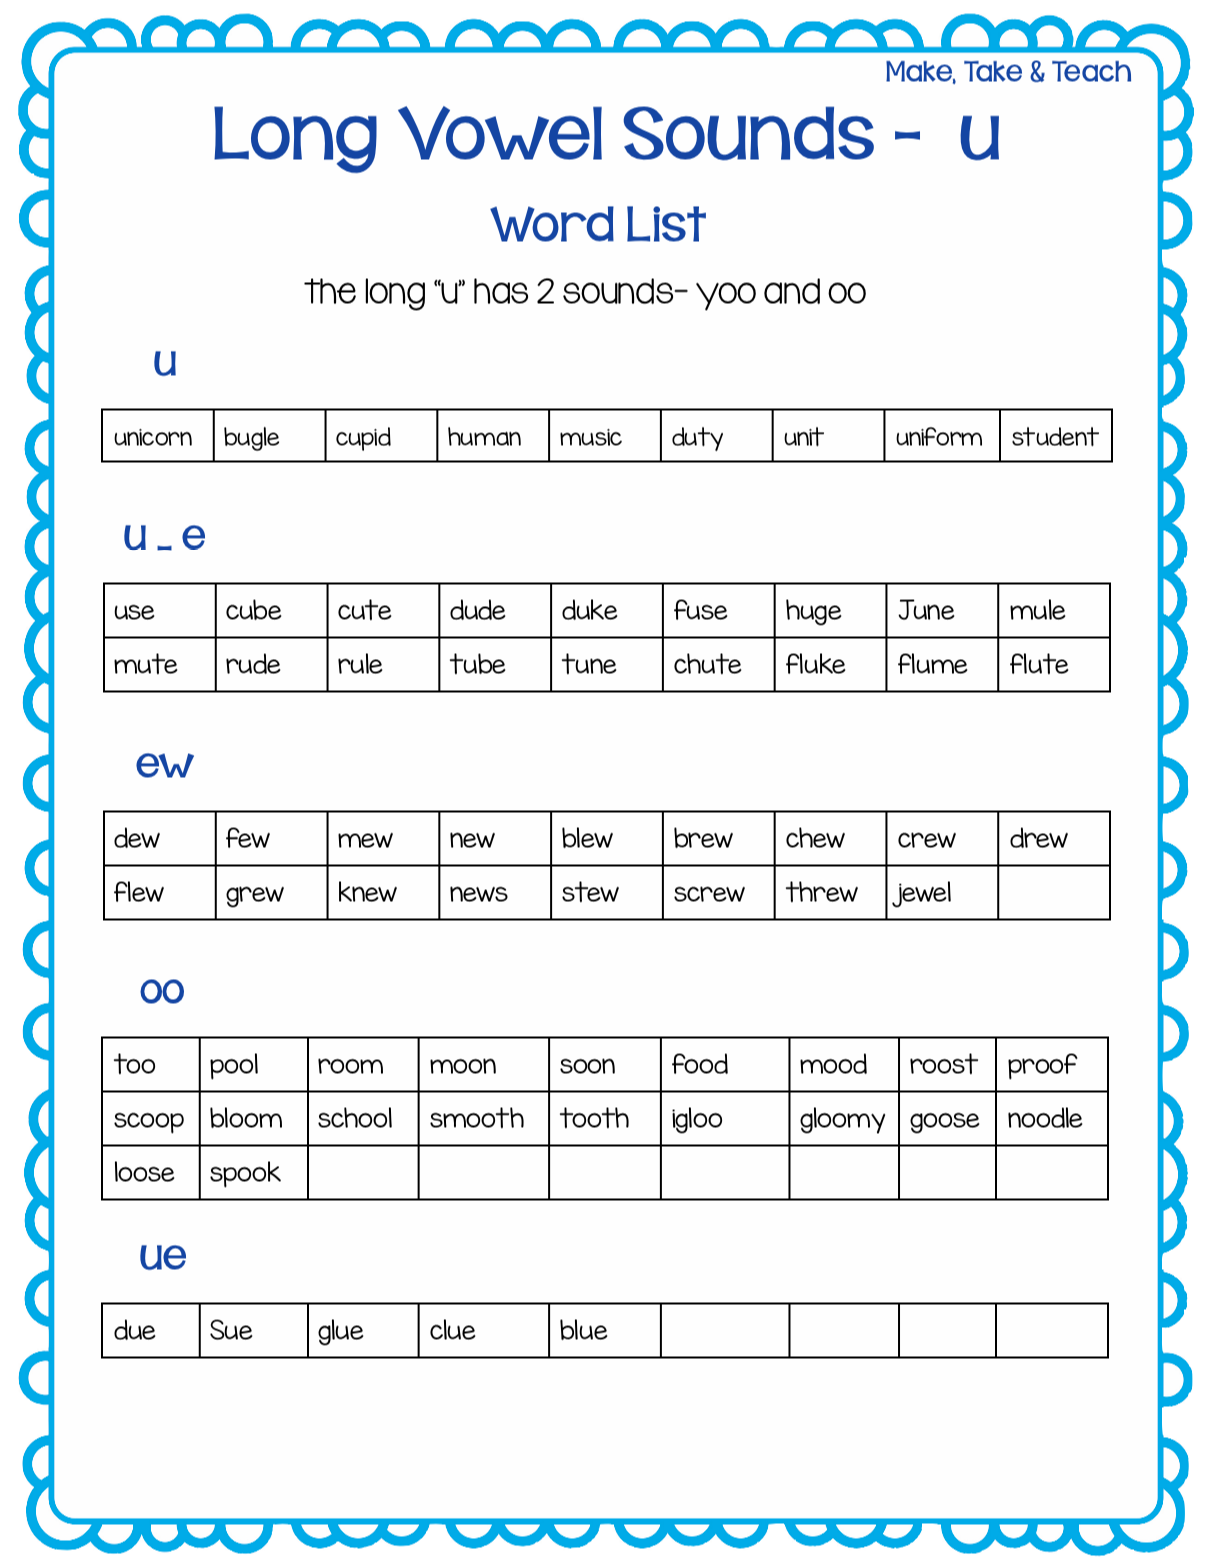 free-long-vowel-spelling-word-lists-make-take-teach